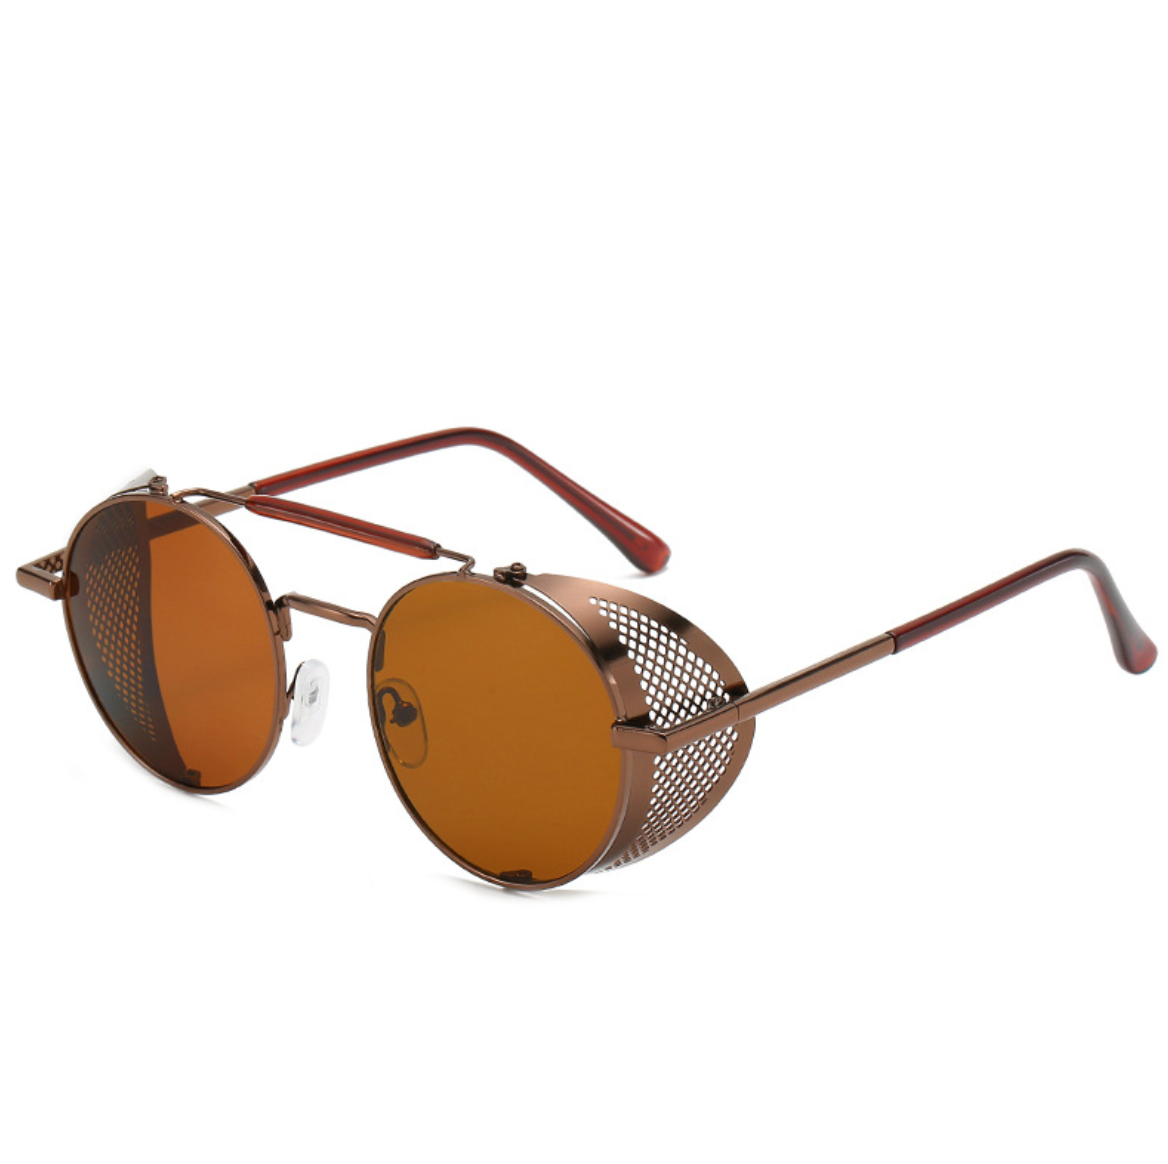 KDEAM Vintage Round Sunglasses Men Women Leather Shield Sun